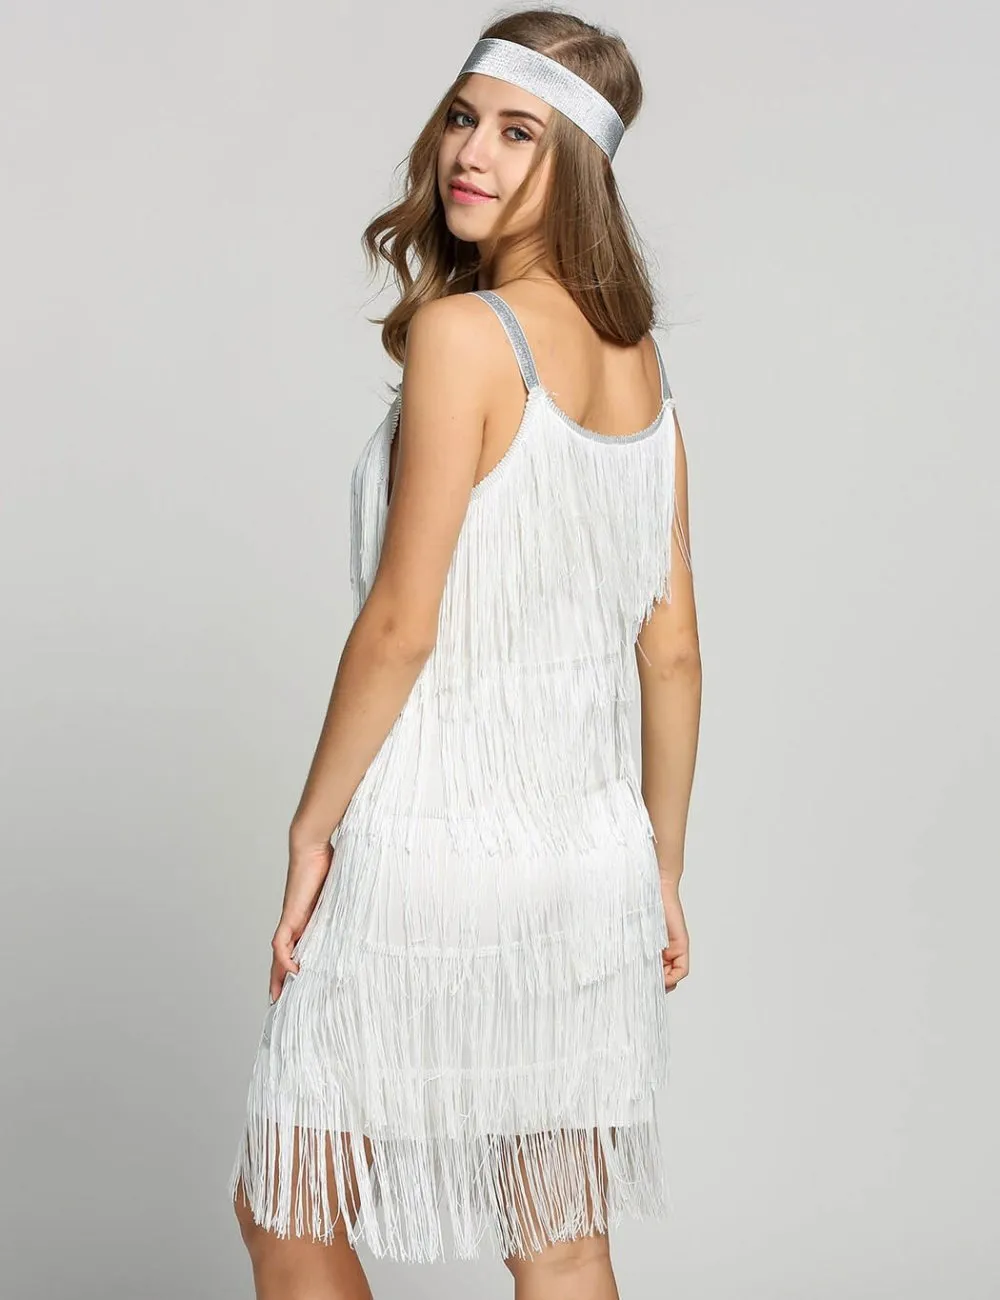 flapper fringe dress (10)